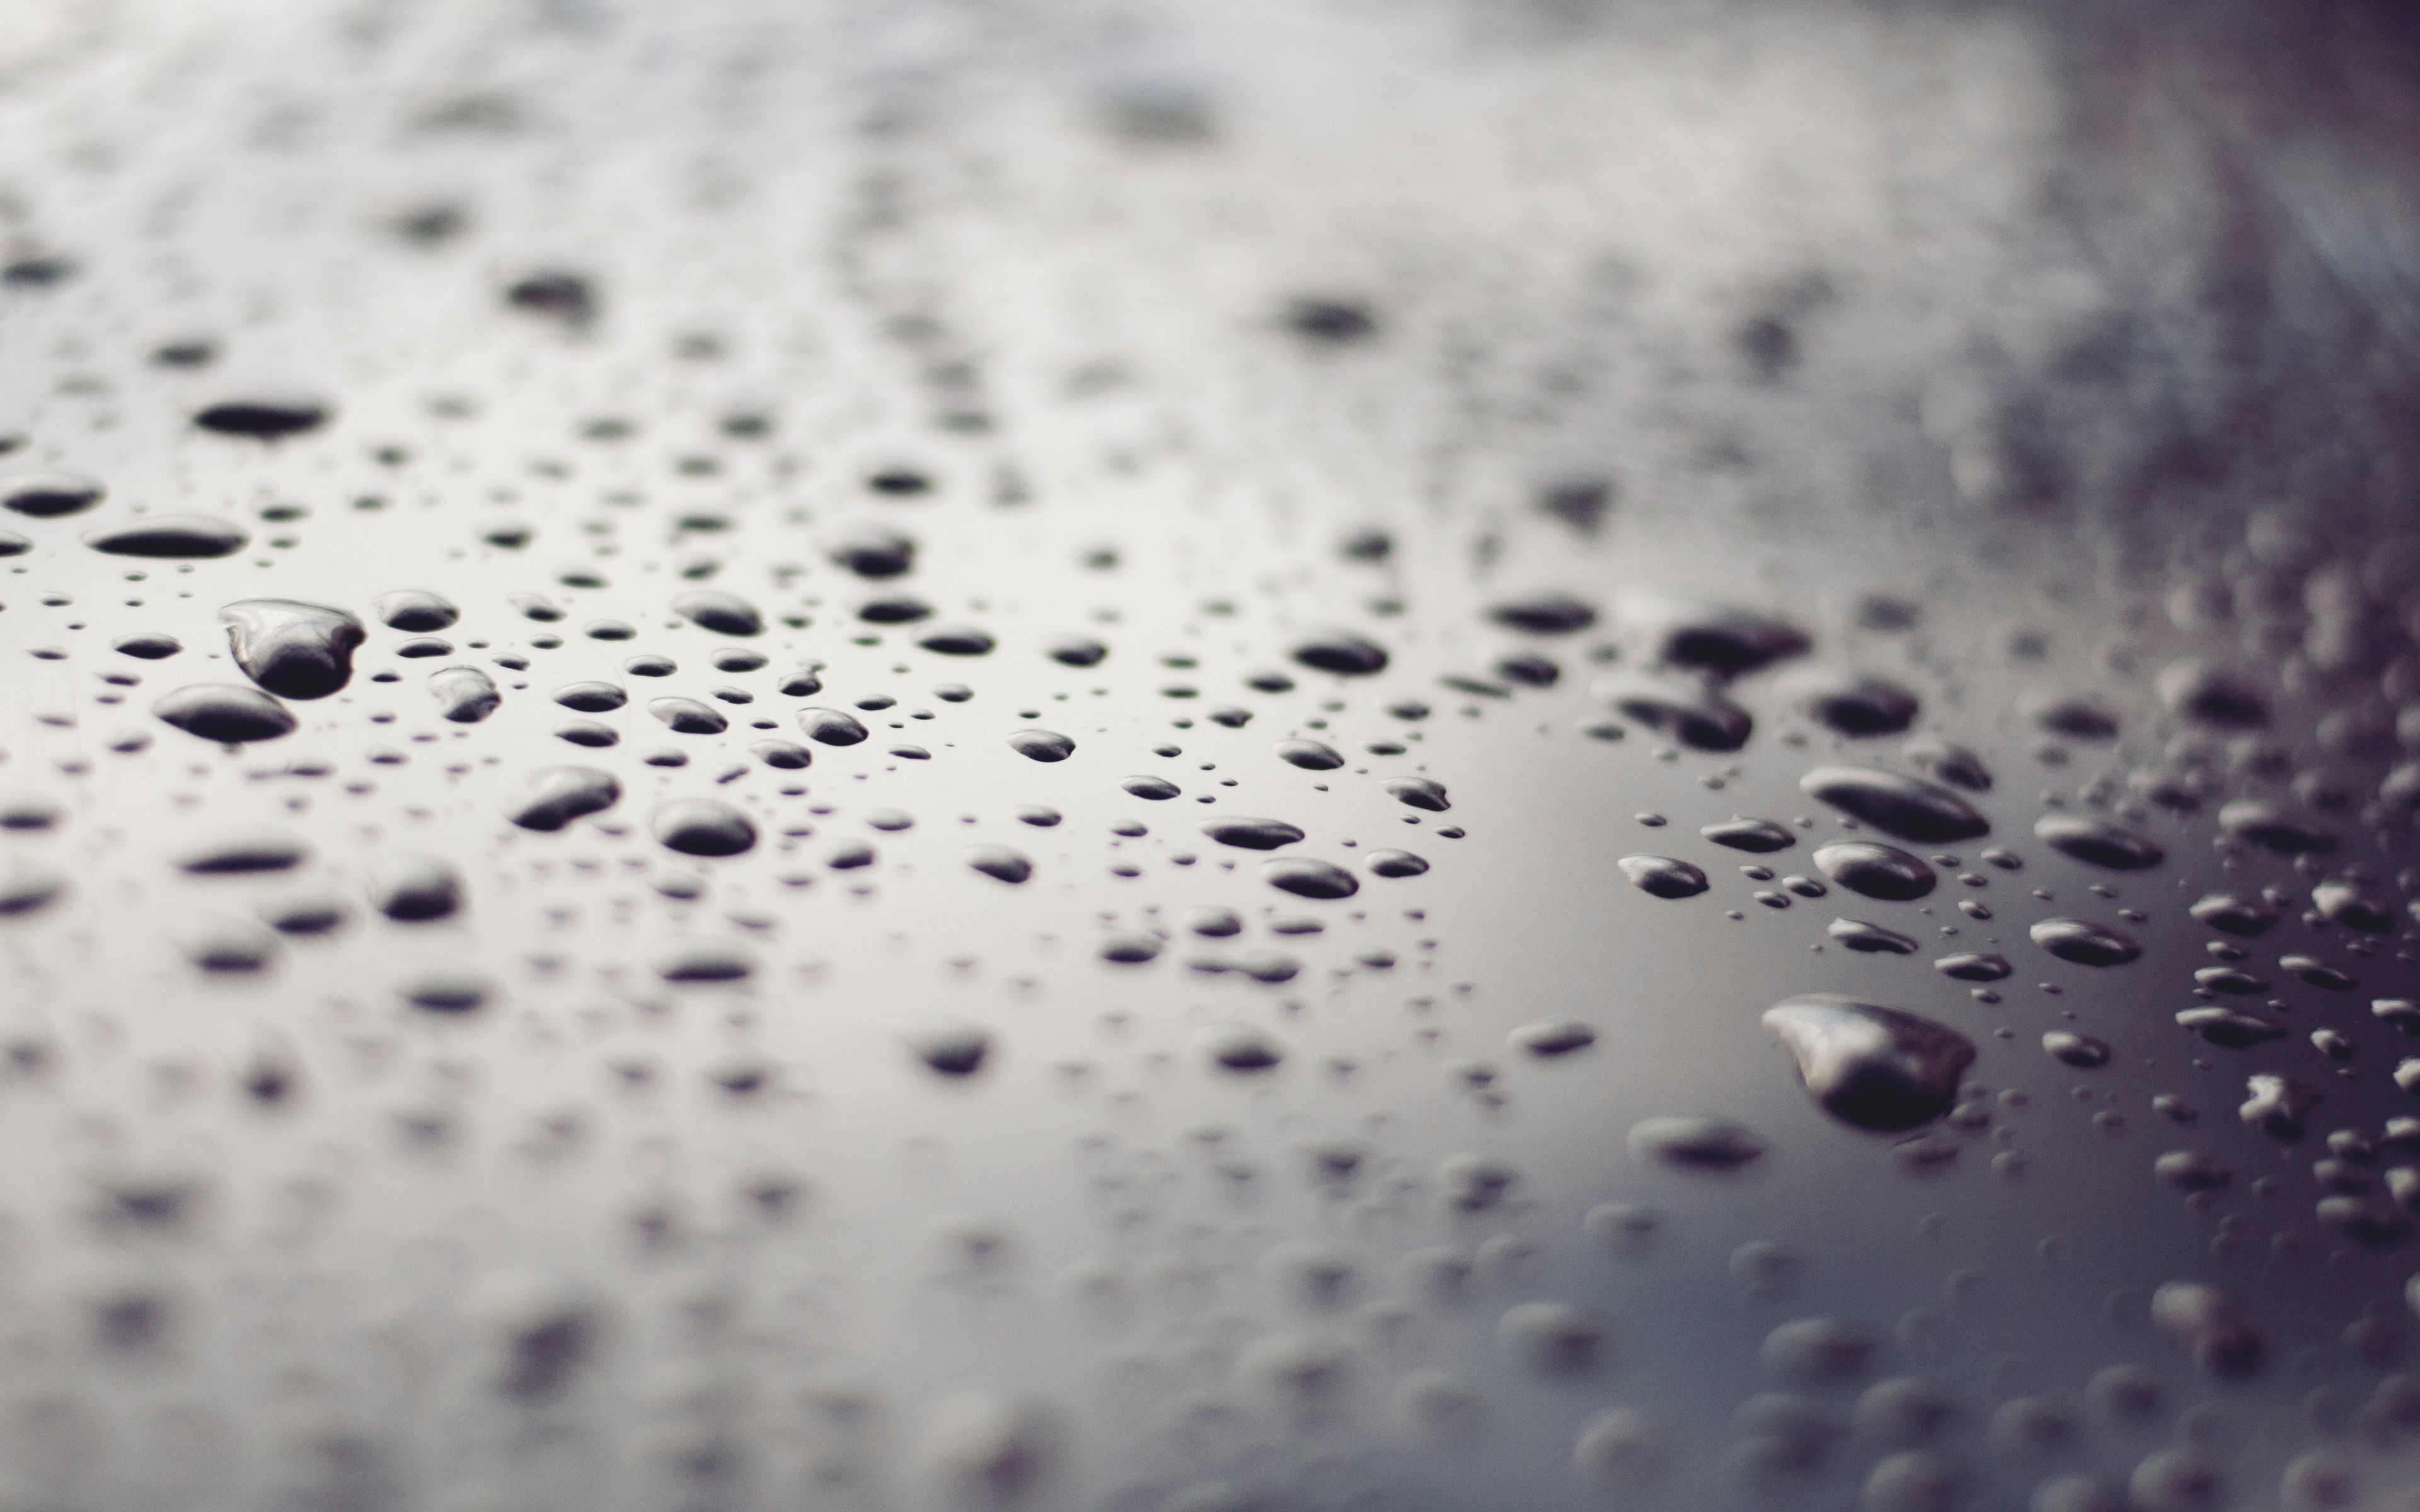 Raindrops on a metallic surface wallpaper 3840x2400